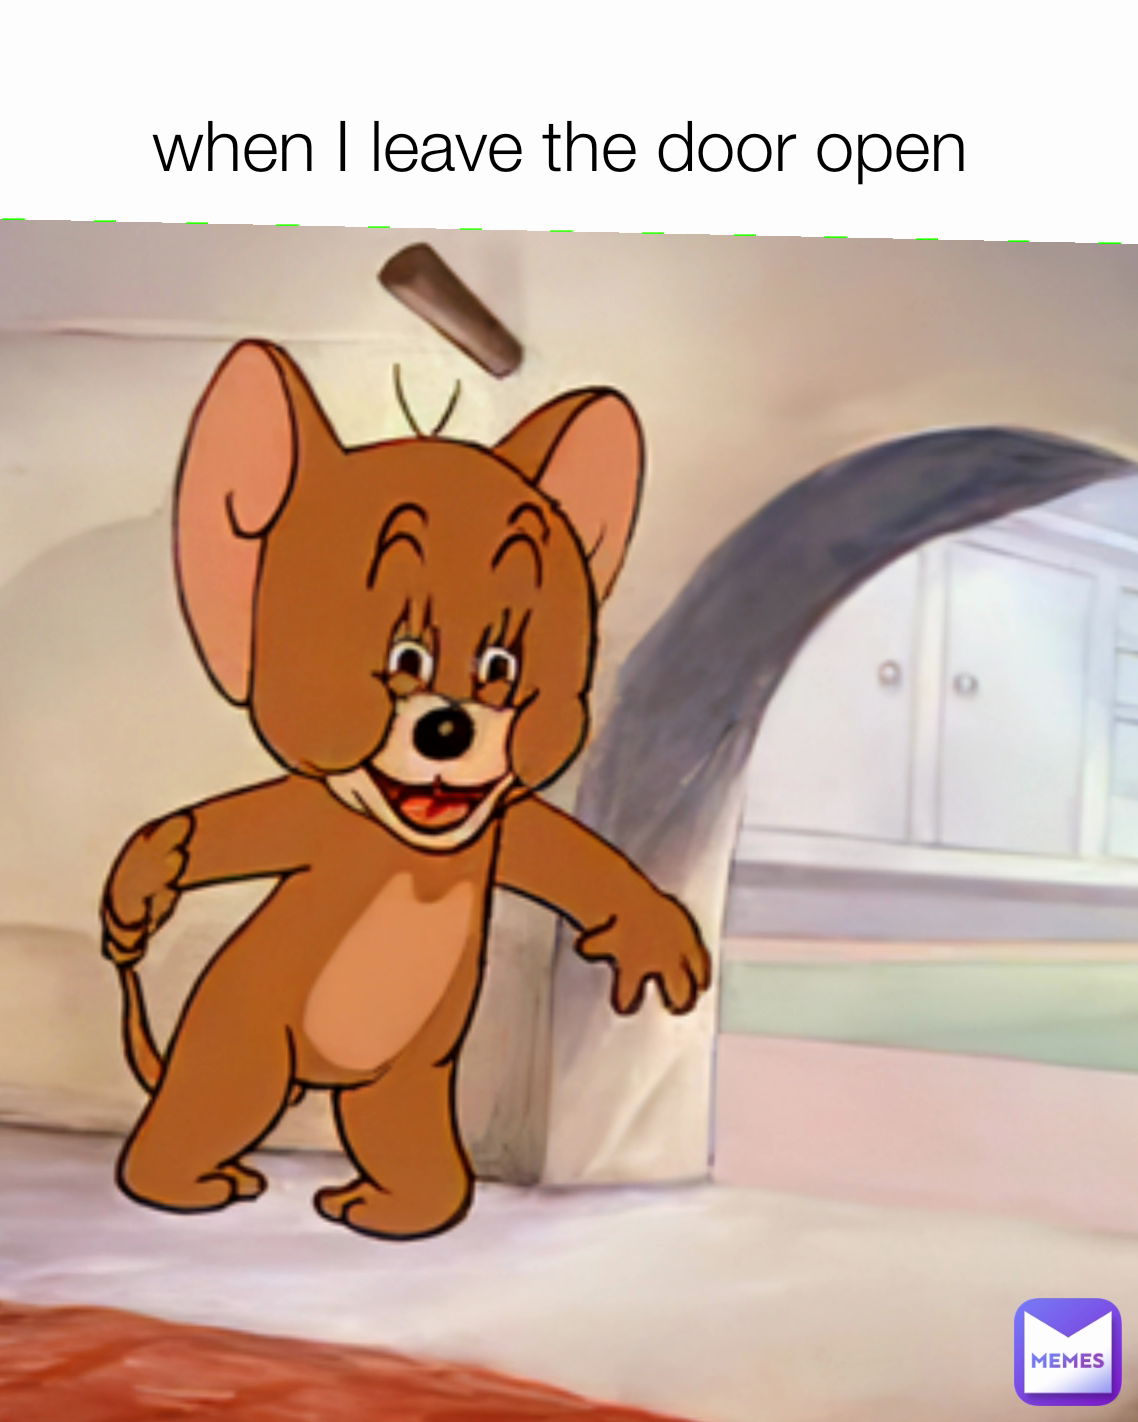 When I Leave The Door Open Jerryman02 Memes